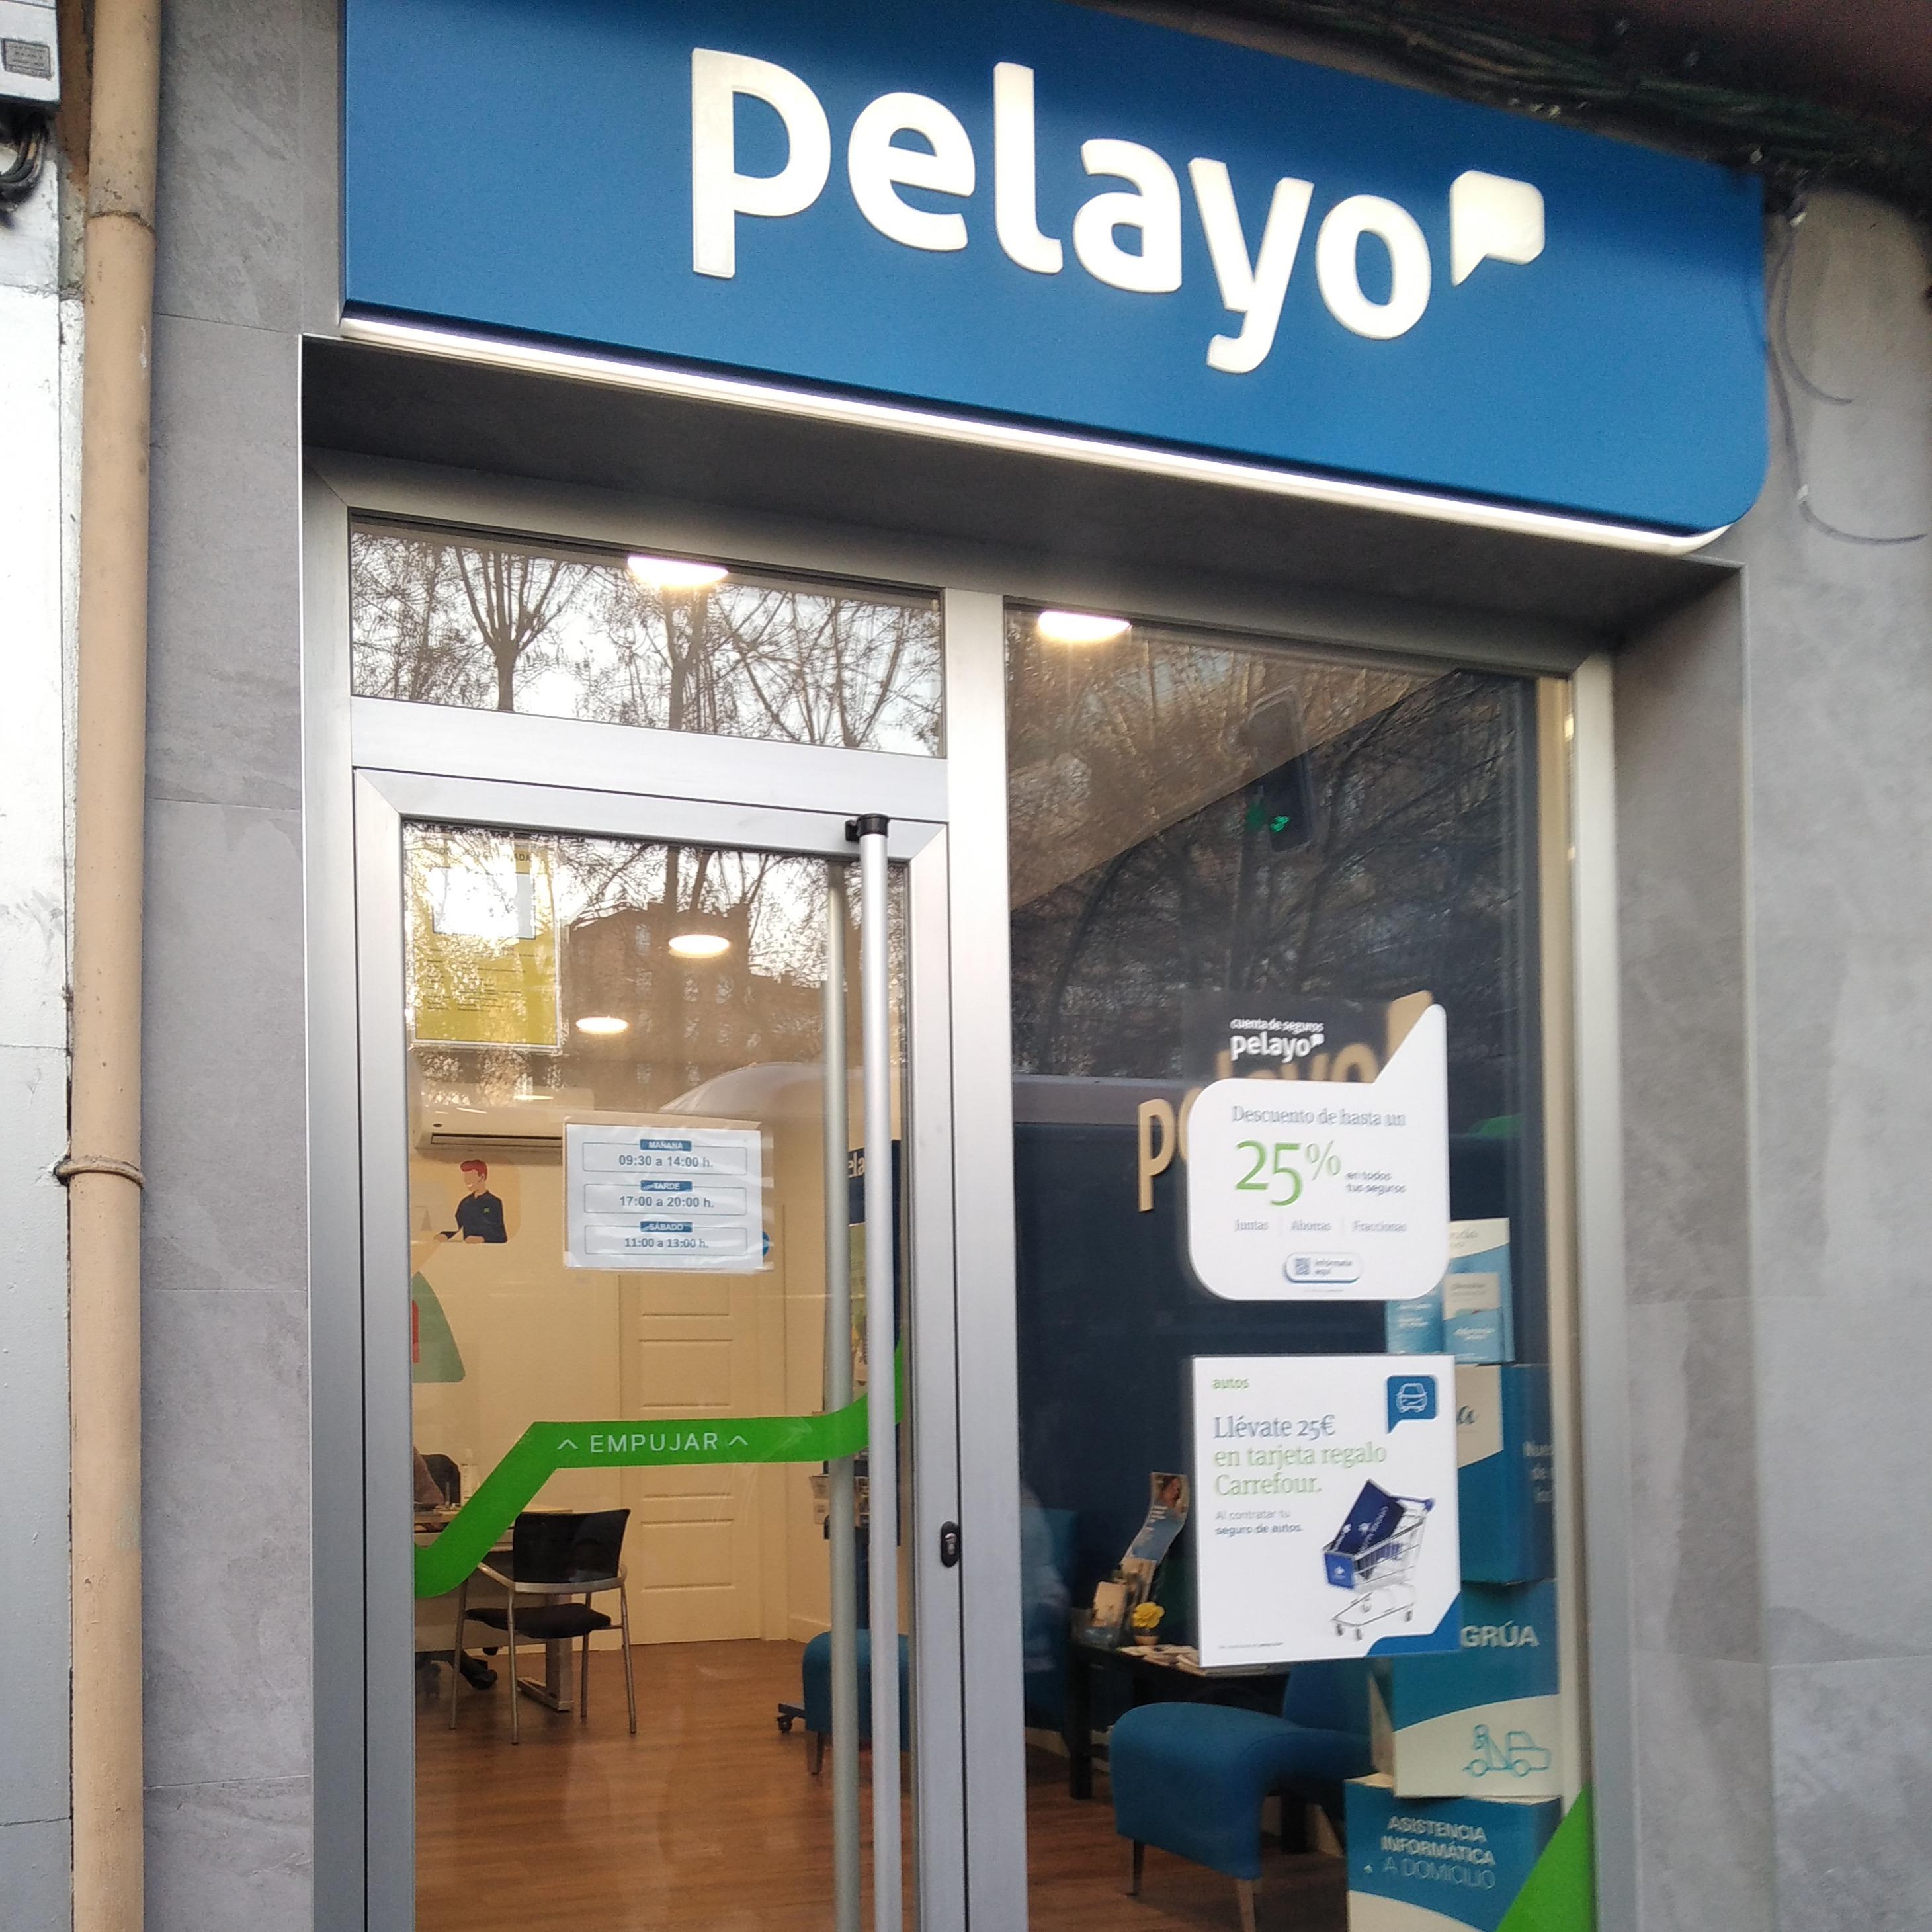 Oficina Seguros Pelayo Valladolid